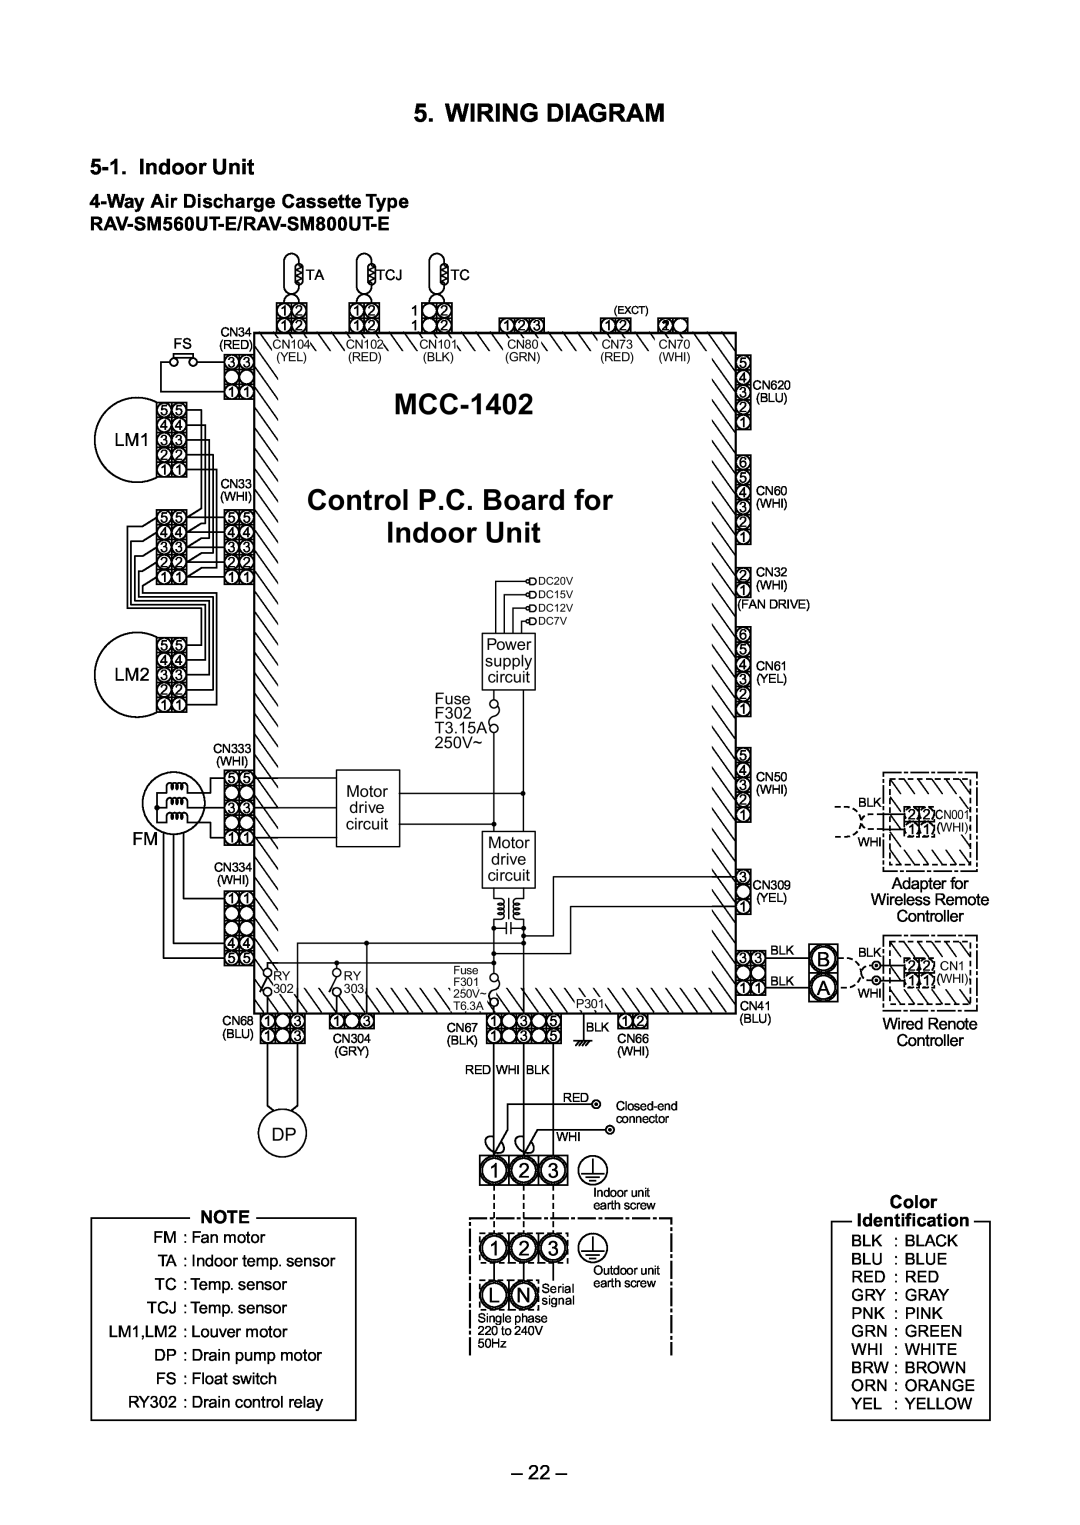 Toshiba RAV-SM560BT-E, RAV-SM800AT-E, RAV-SM800UT-E MCC-1402, Control P.C. Board for, Indoor Unit, Wiring Diagram 